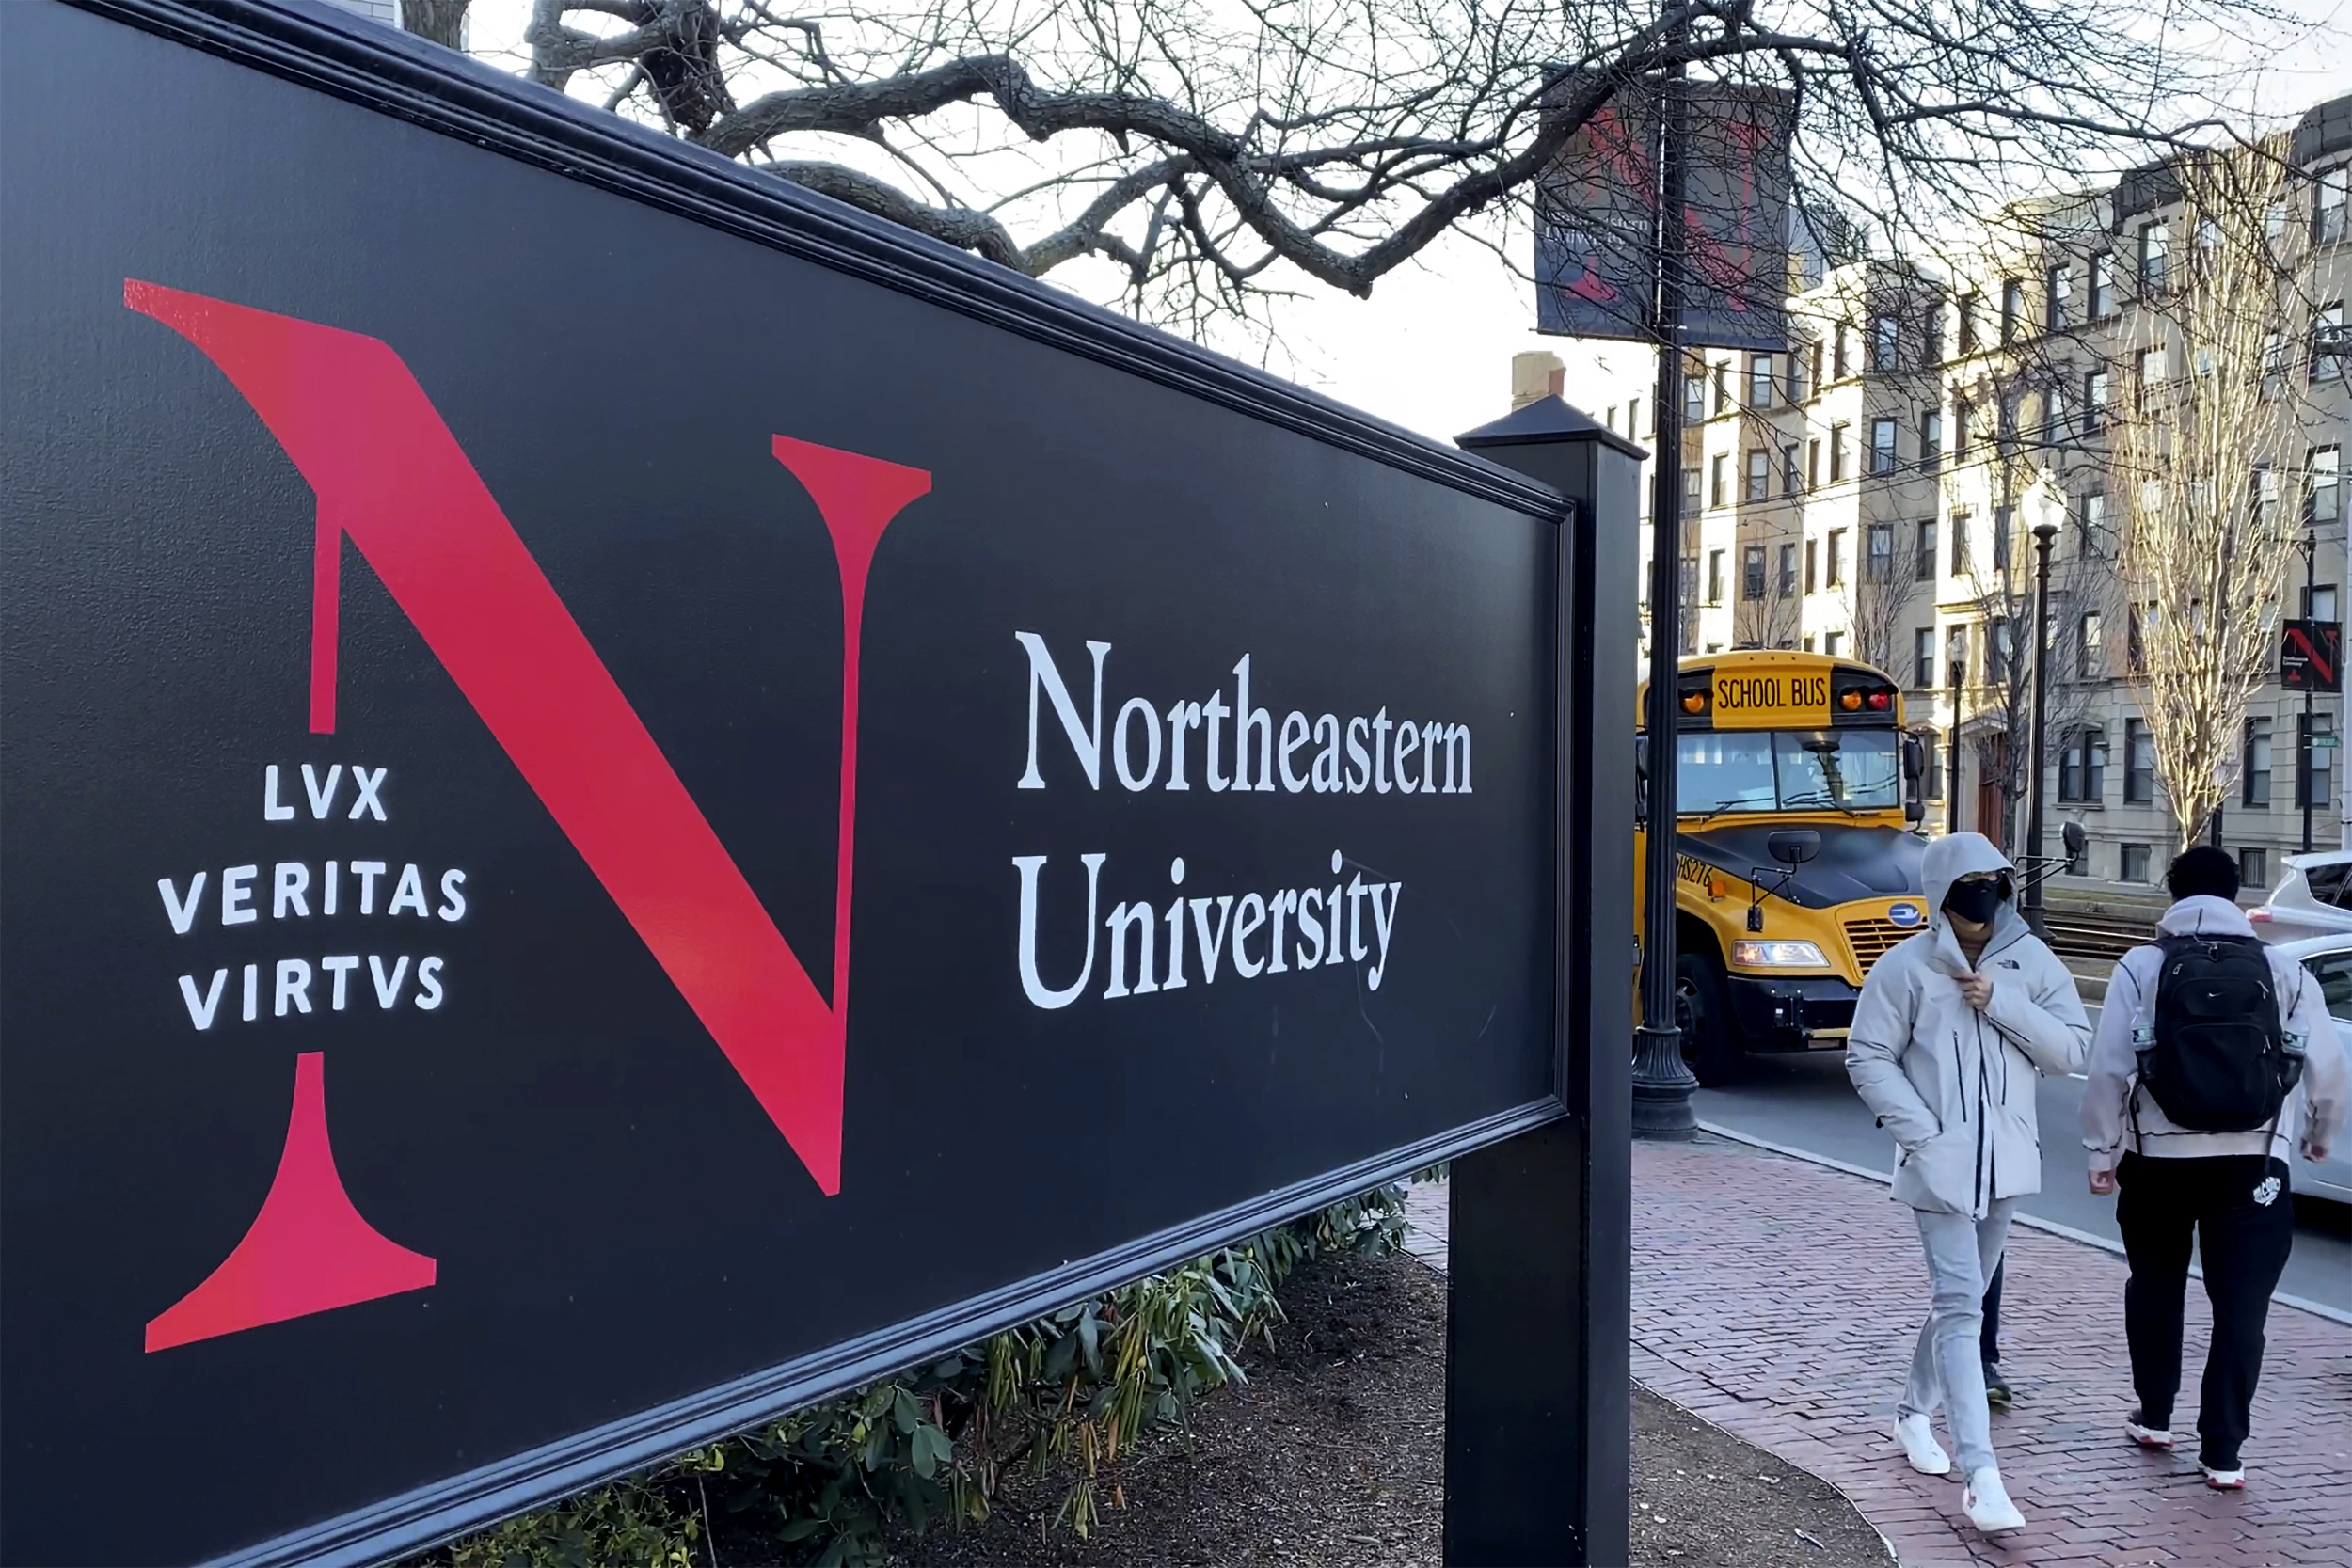 Students walk on the Northeastern University campus in Boston